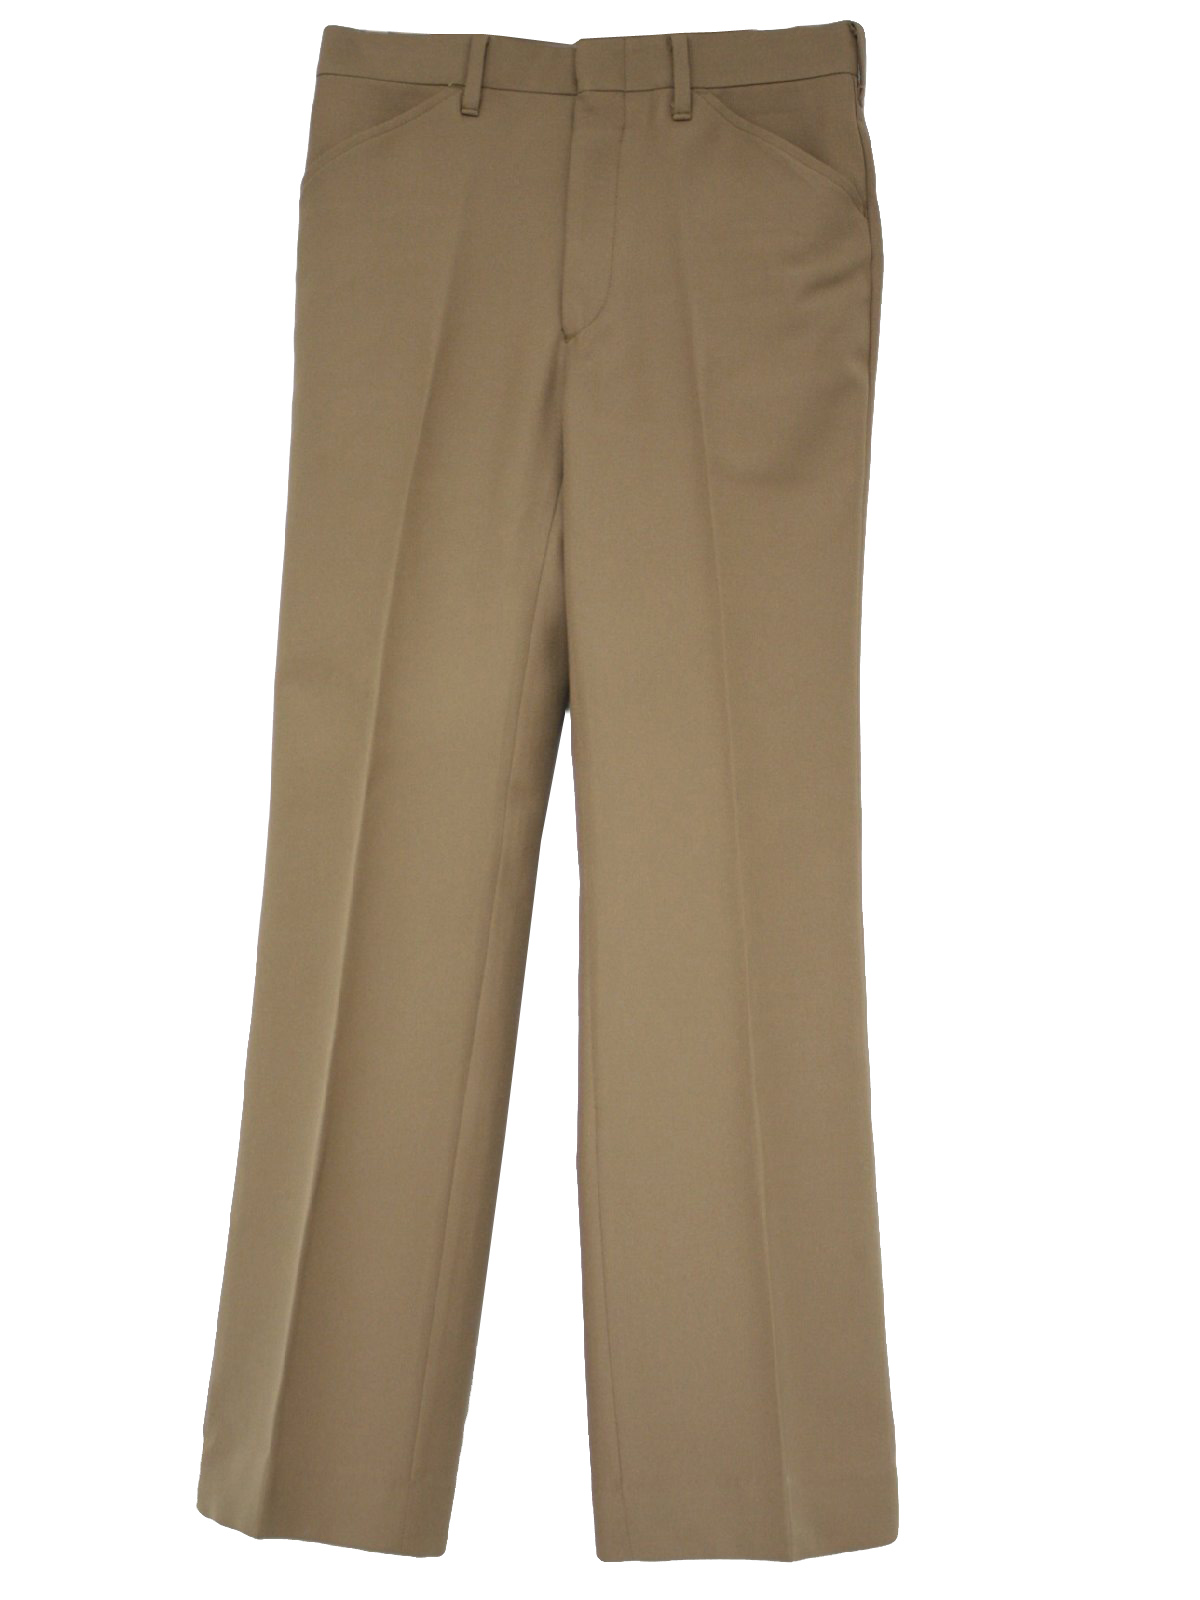 Vintage 70's Flared Pants / Flares: 70s -No Label- Mens tan polyester ...